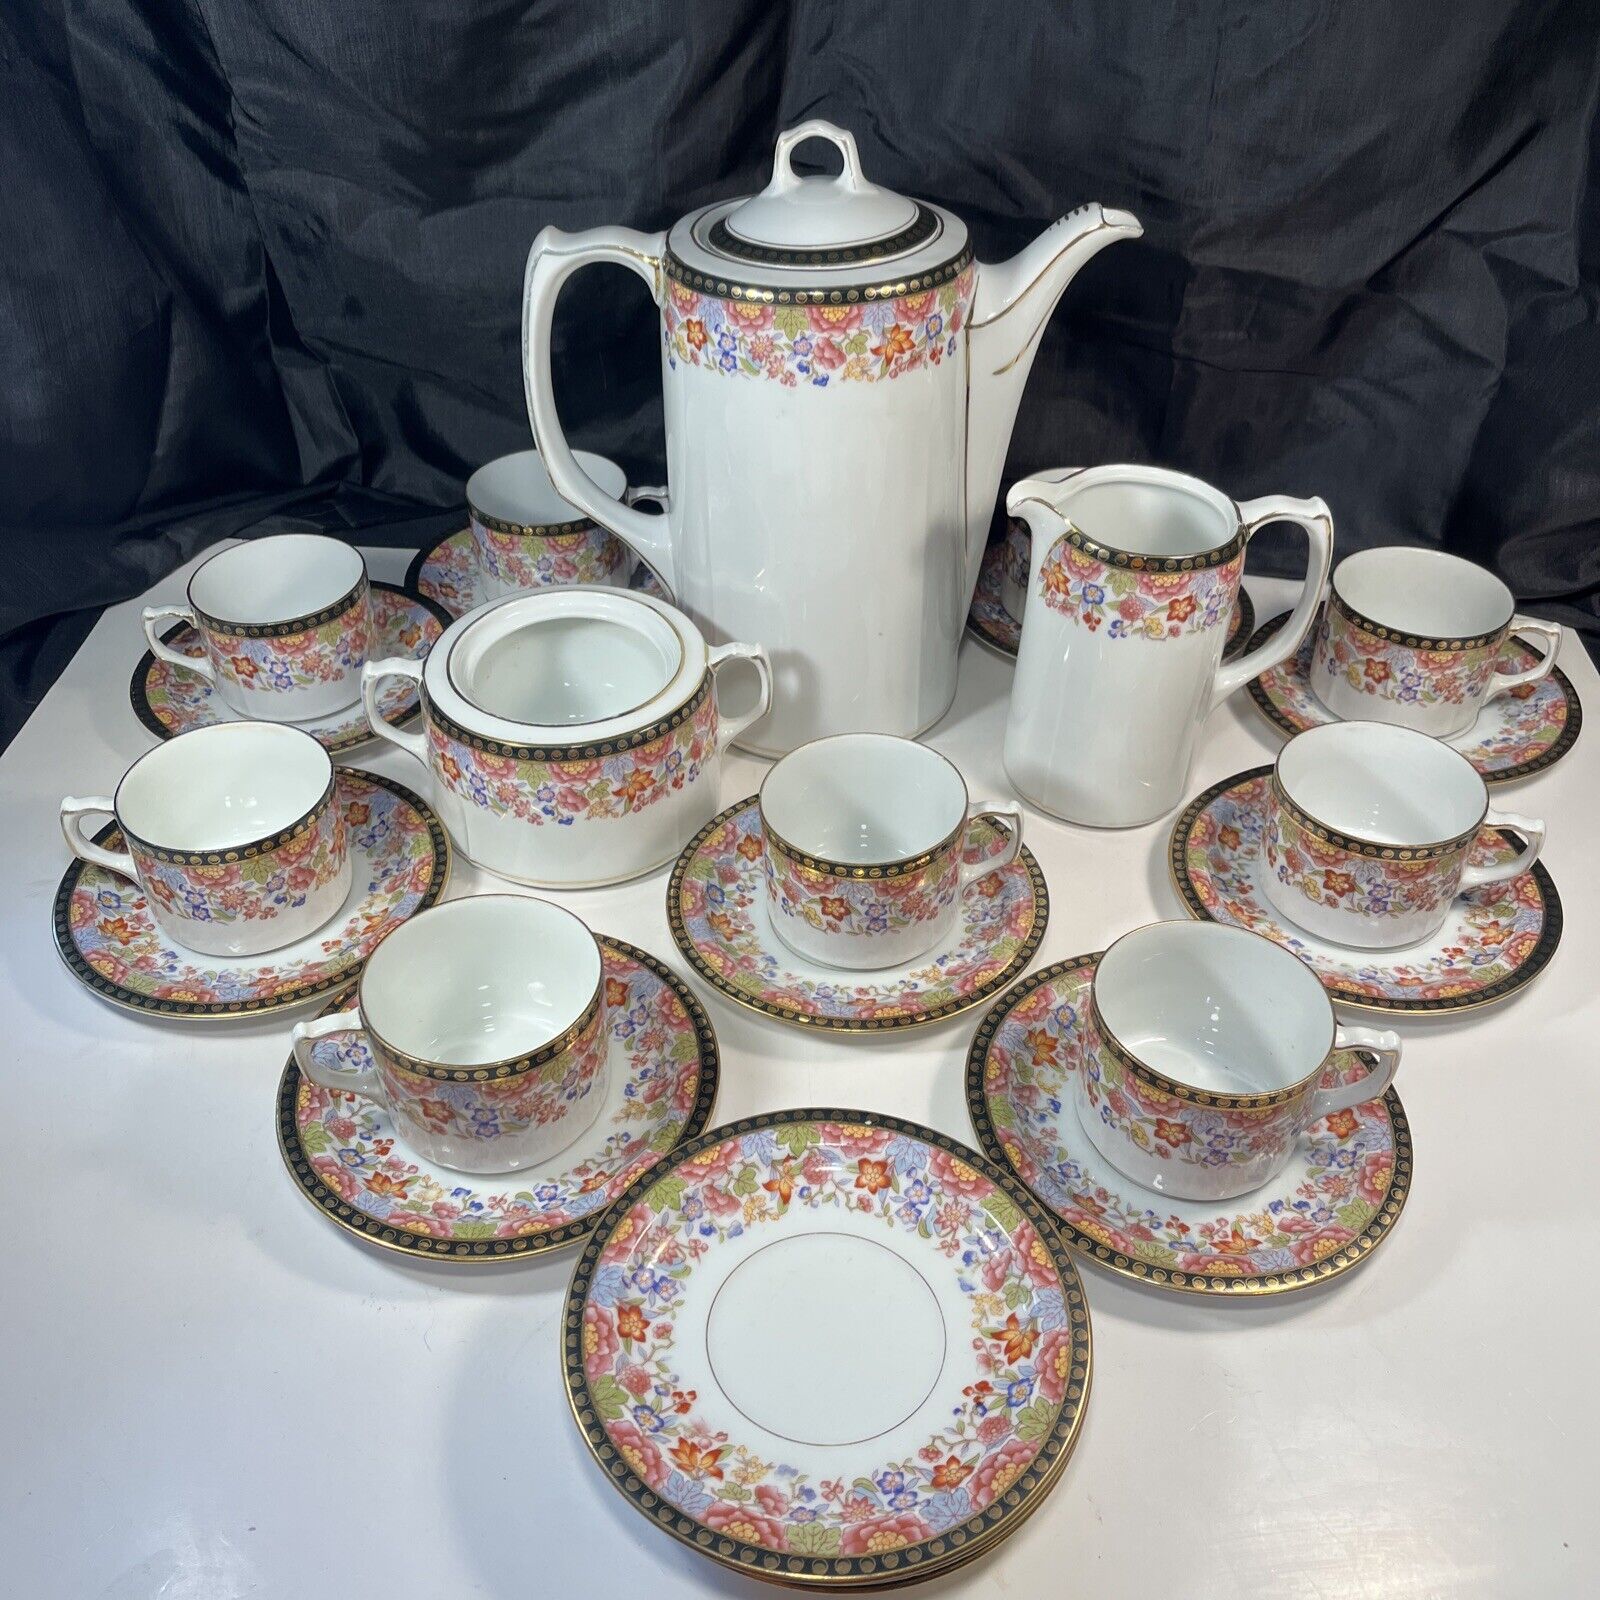 Antique Chocolate Pot Set: Includes pitcher &lid 9 cups 12 saucers Creamer Sugar